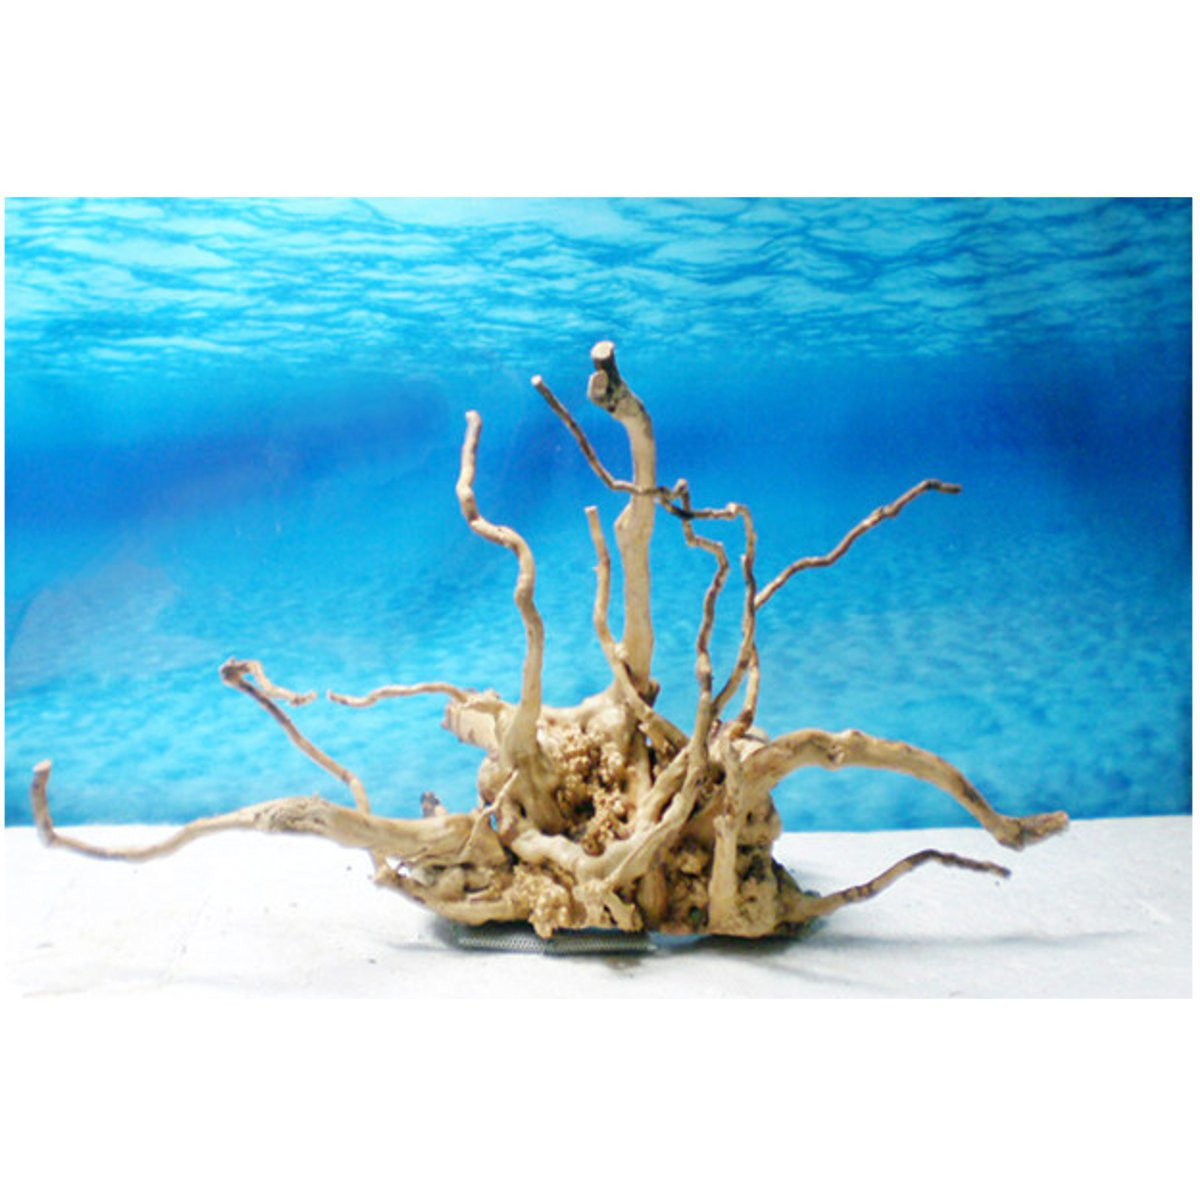 Driftwood Root Natural Aquarium Decoration Tree Trunk Fish Log Stump Cuckoo